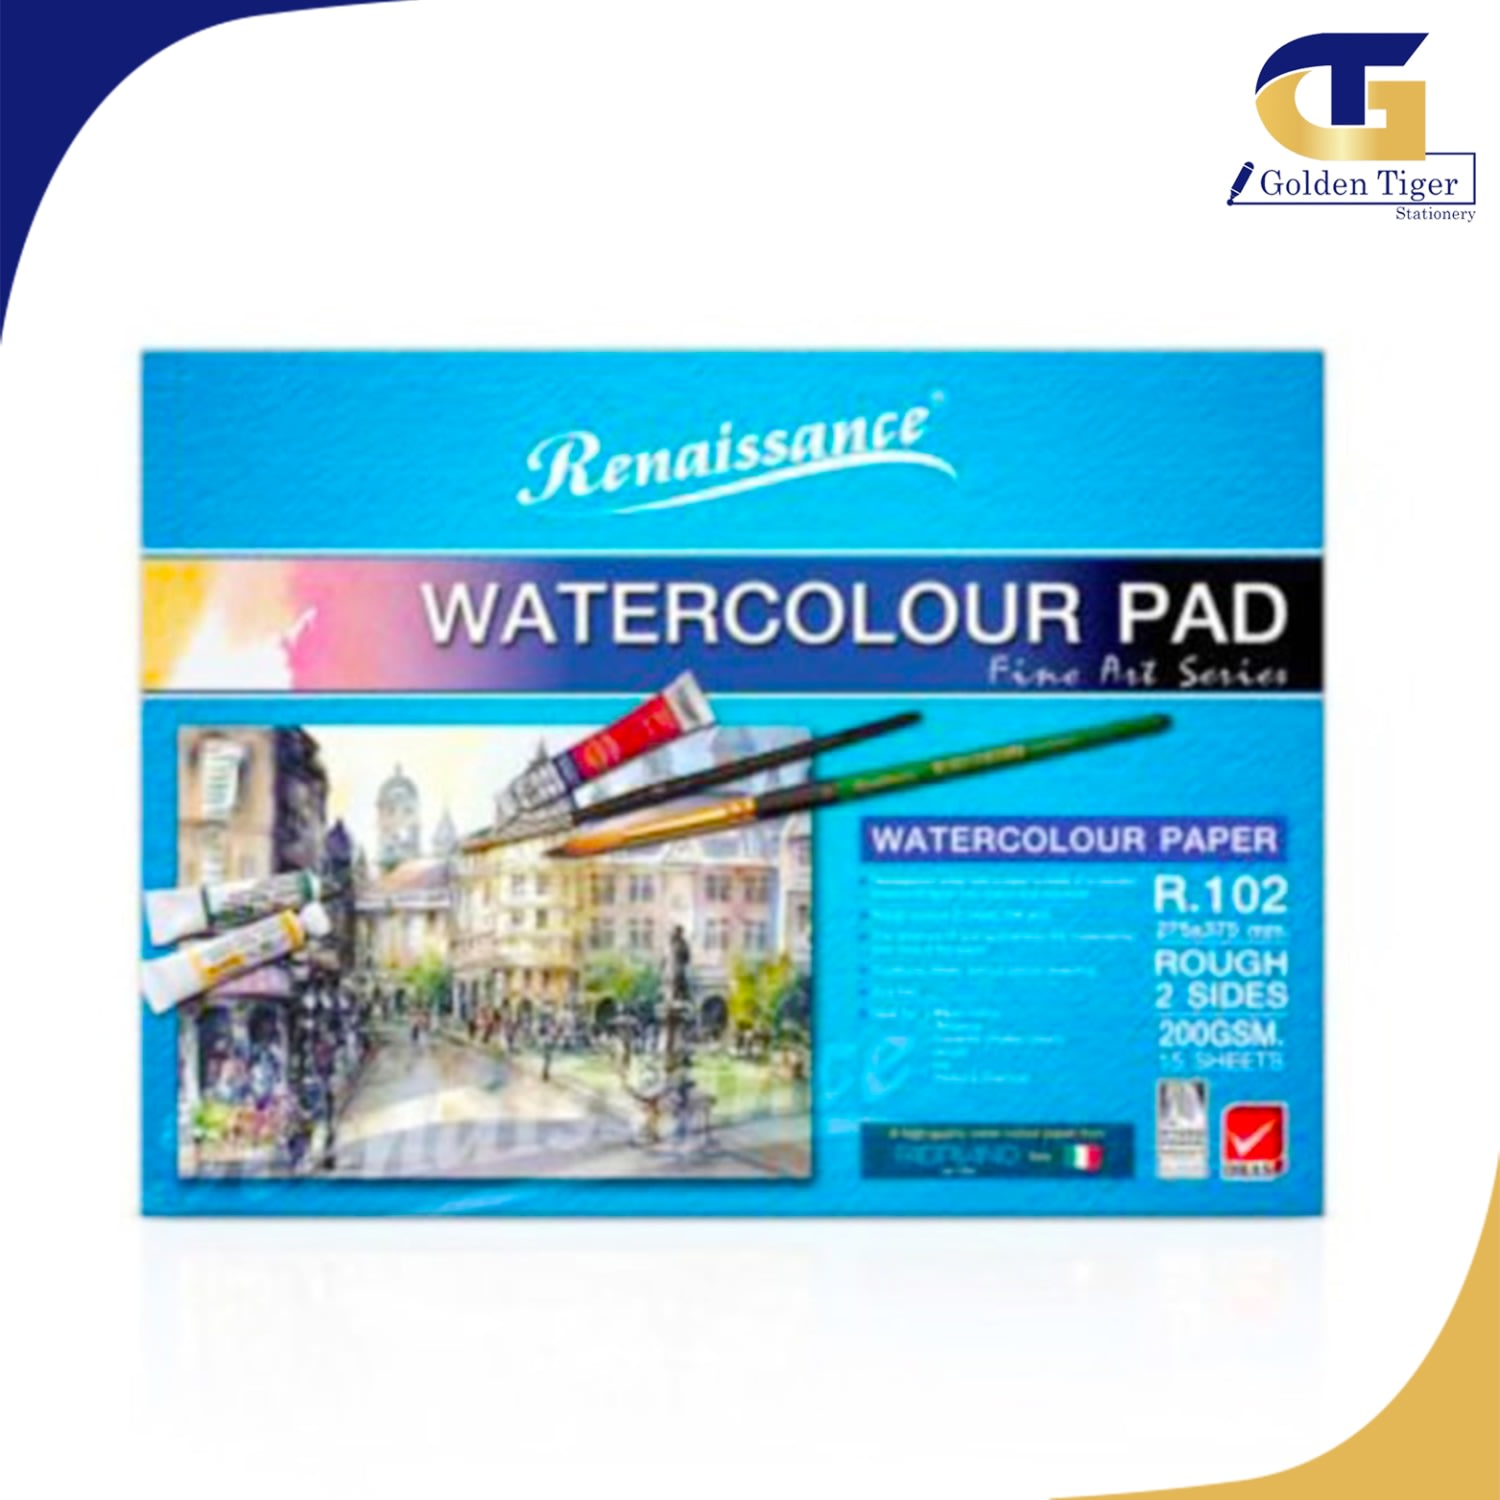 Renaissance Water Color Pad R602 (size 275x375mm) 300g 10sheets